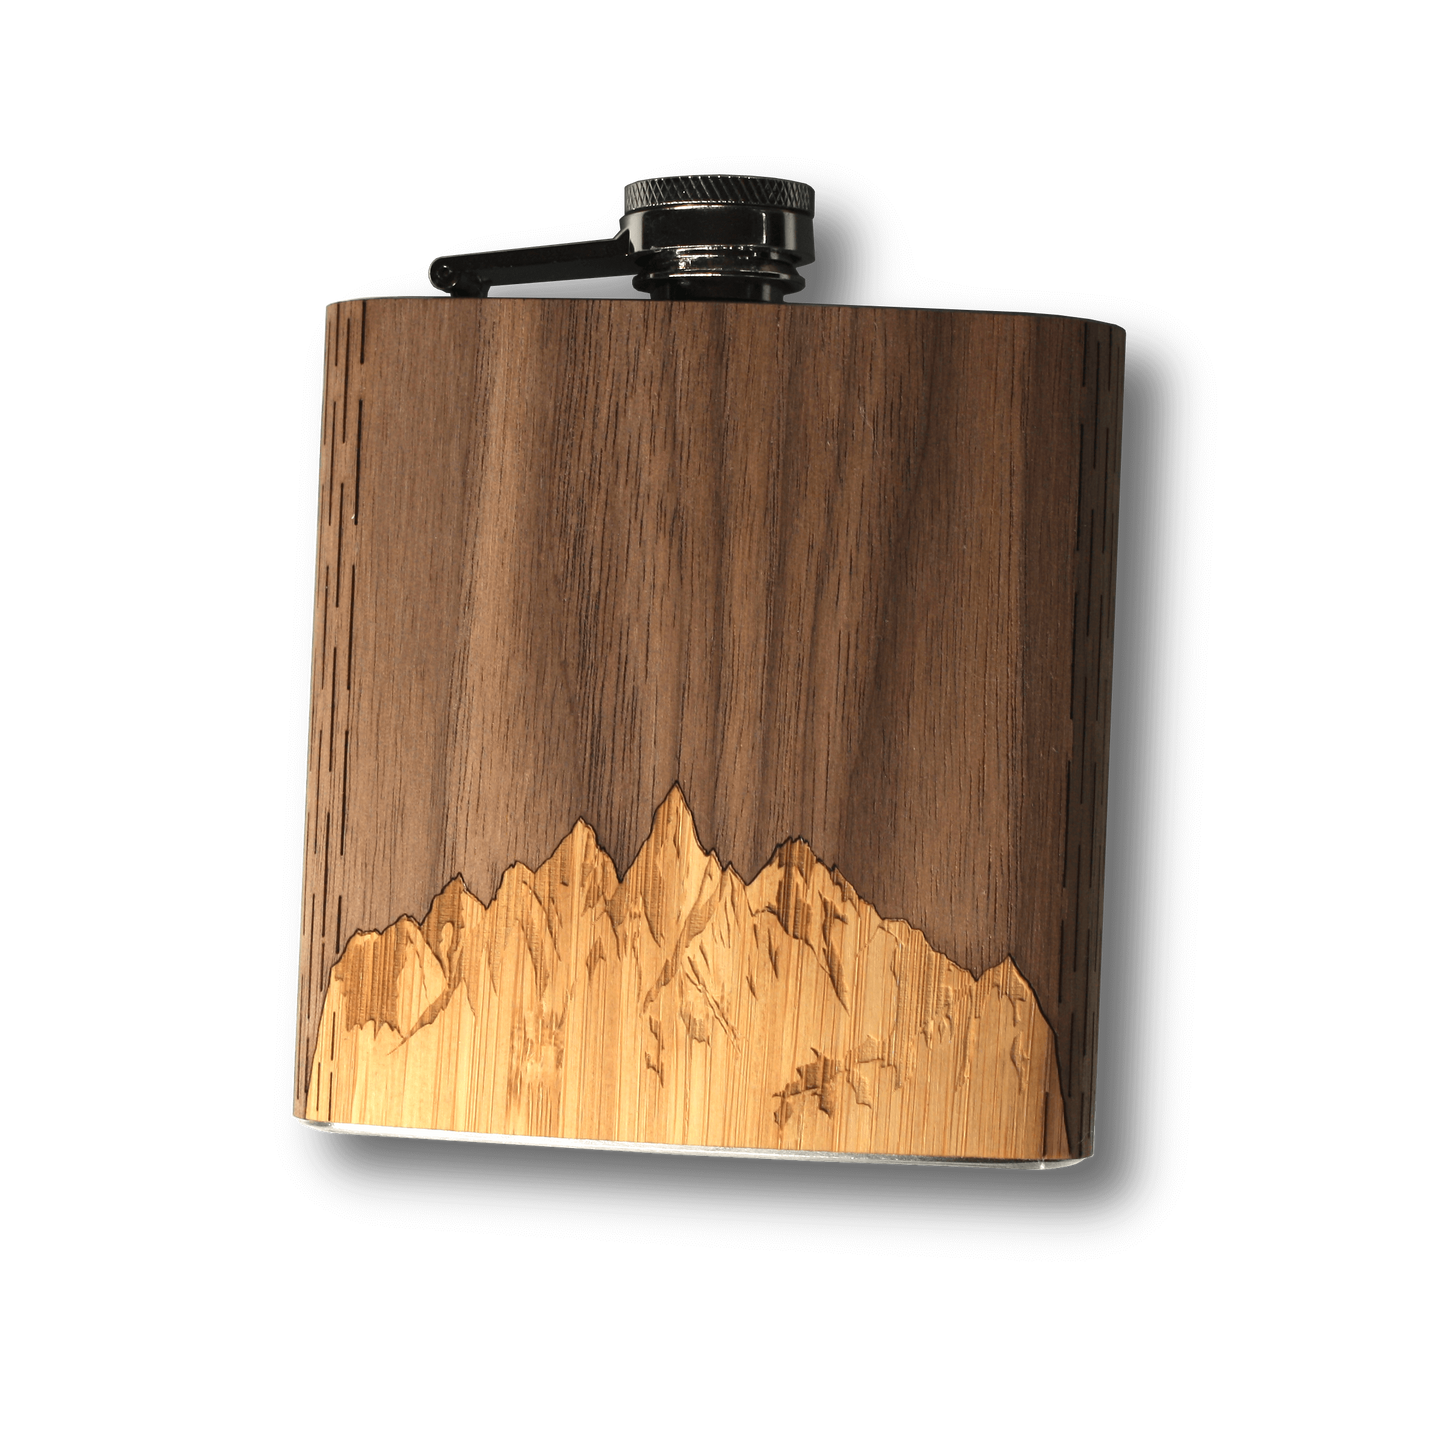 6 oz. Wooden Hip Flask - Sawtooth Mountains